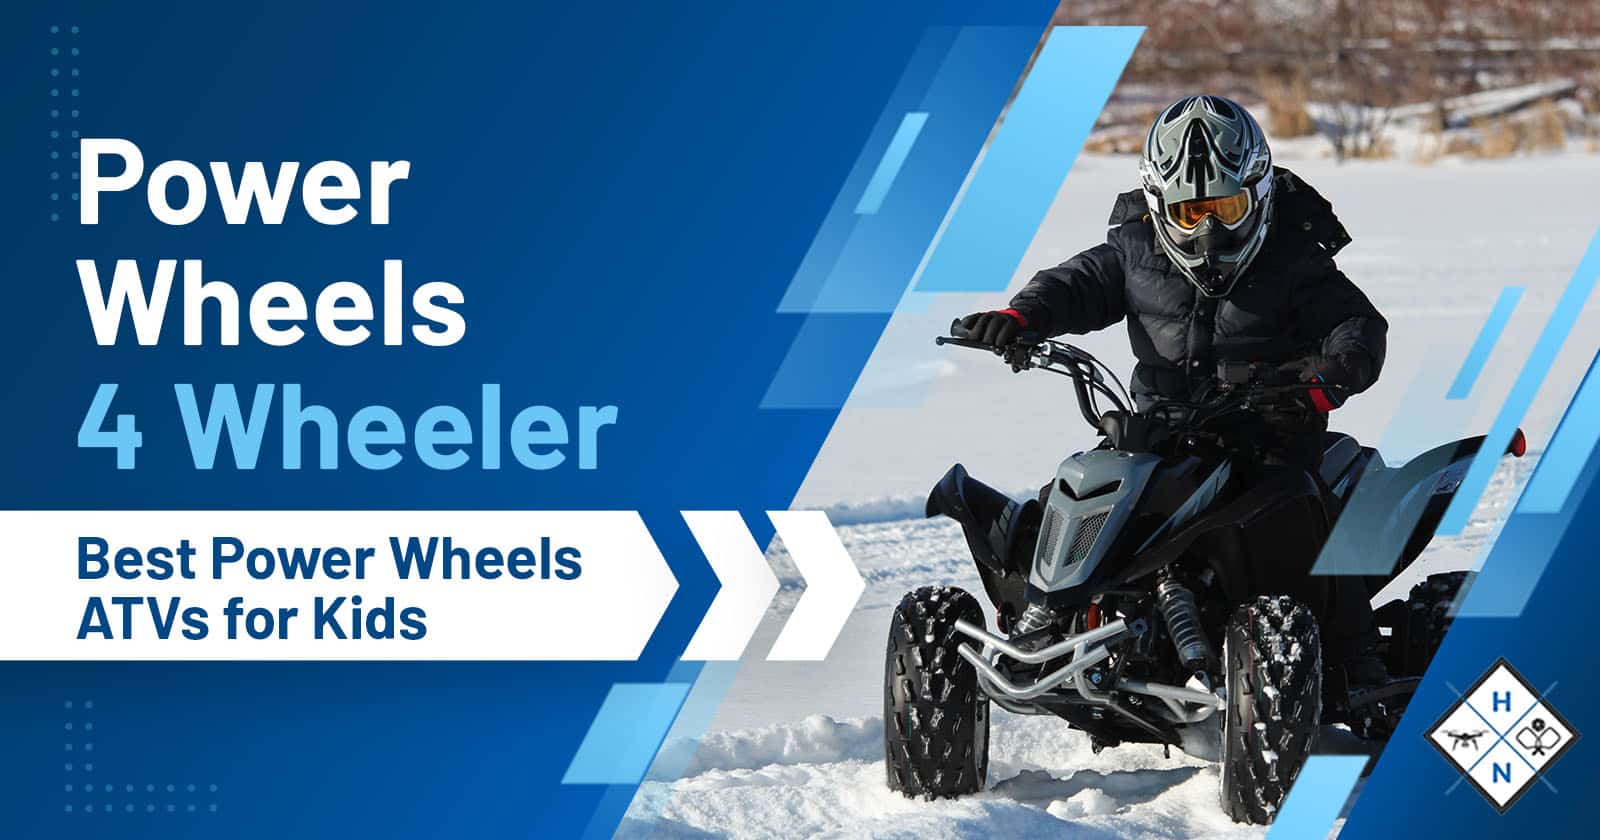 Power Wheels 4-Wheeler – Best Power Wheels ATVs for Kids